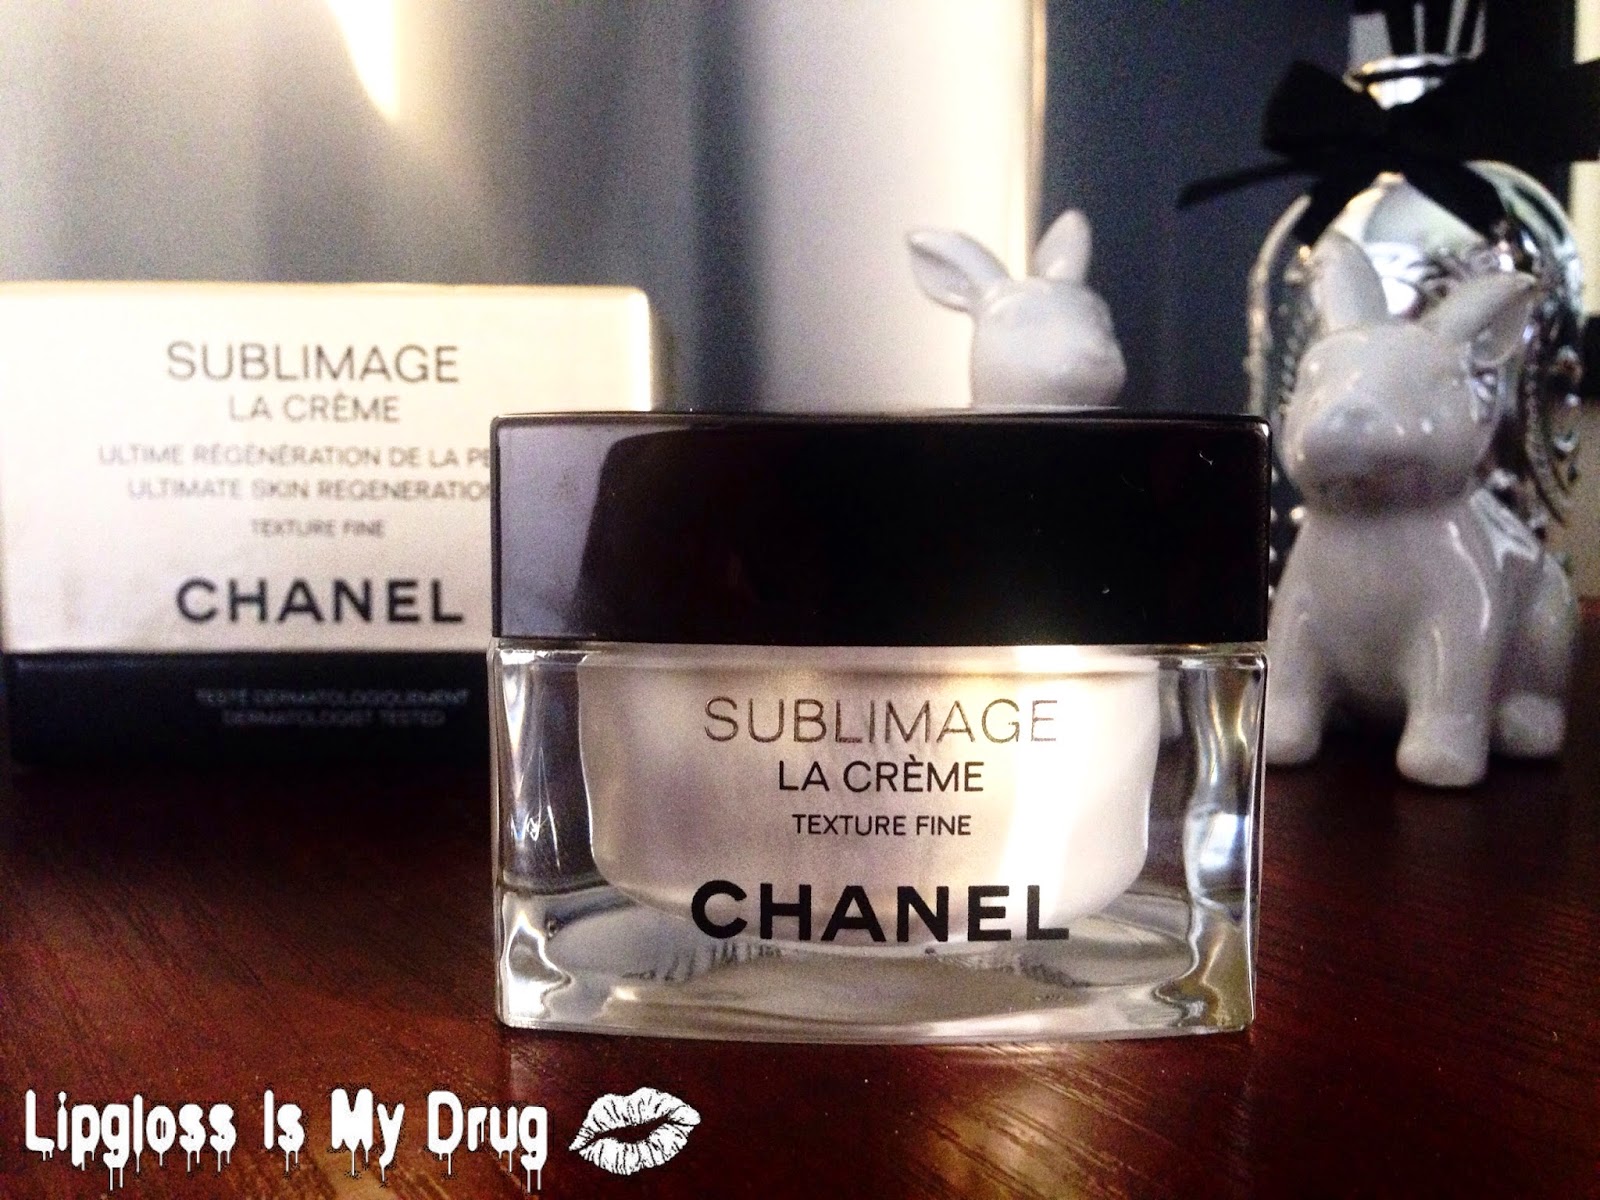 Lipgloss Is My Drug: Chanel Sublimage La Creme Texture Fine - Review